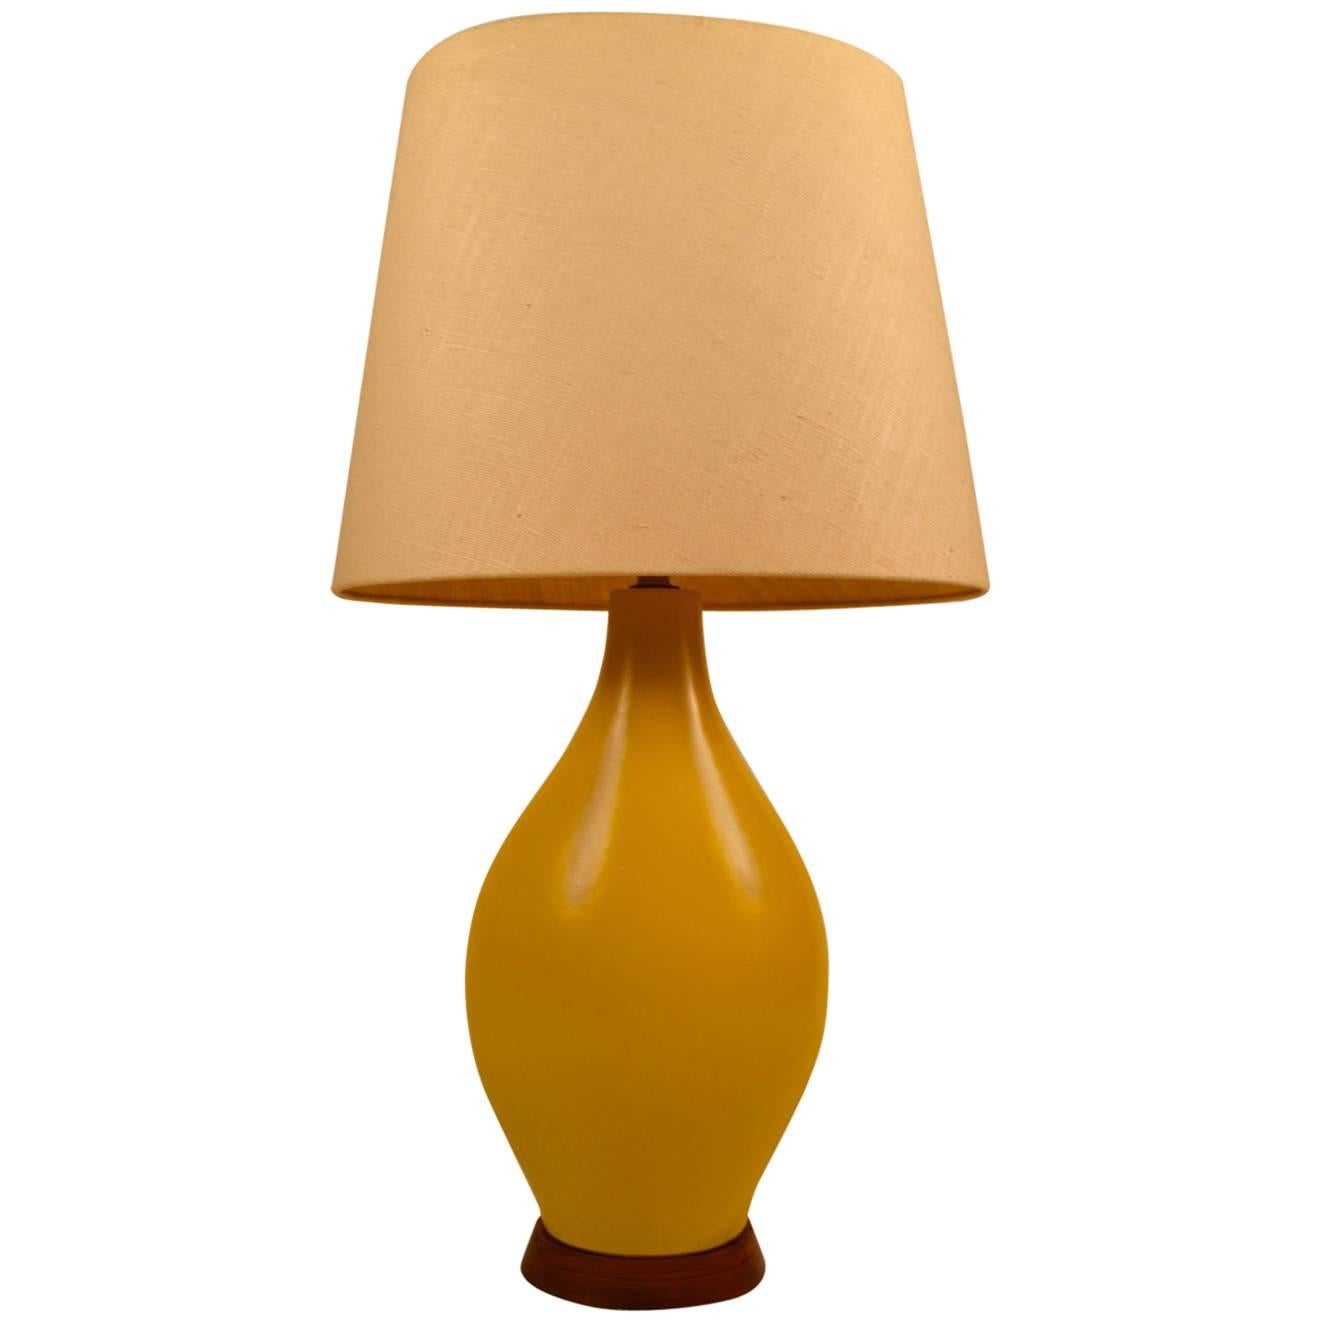 Large Teardrop Form Yellow Ceramic Table Lamp